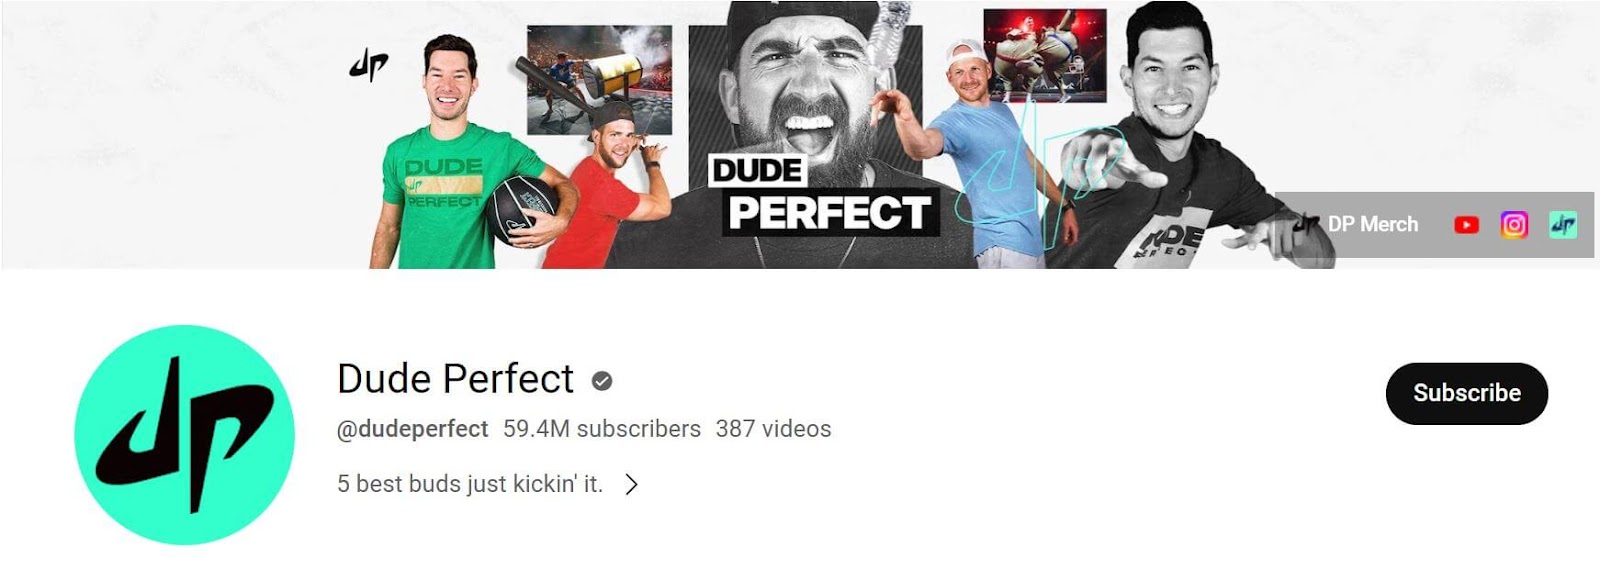 Dude Perfect: Amazing YouTube Influencers